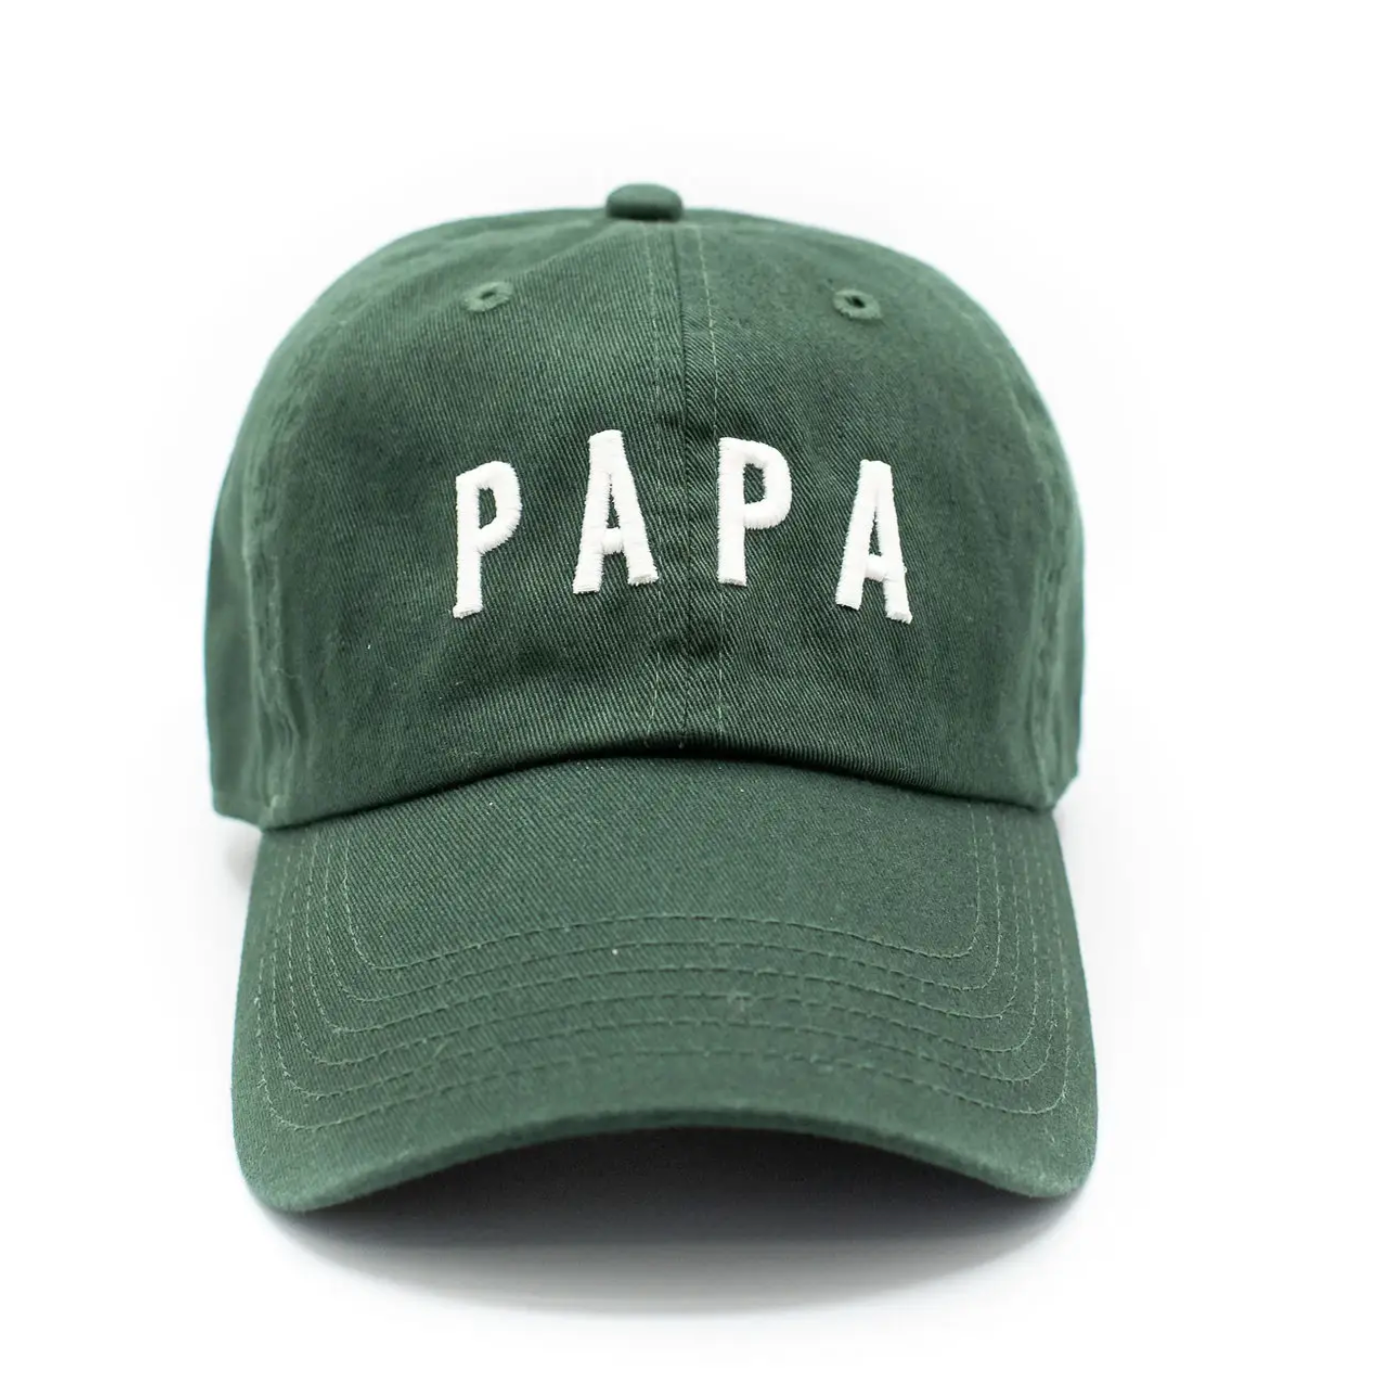 papa hat in hunter green